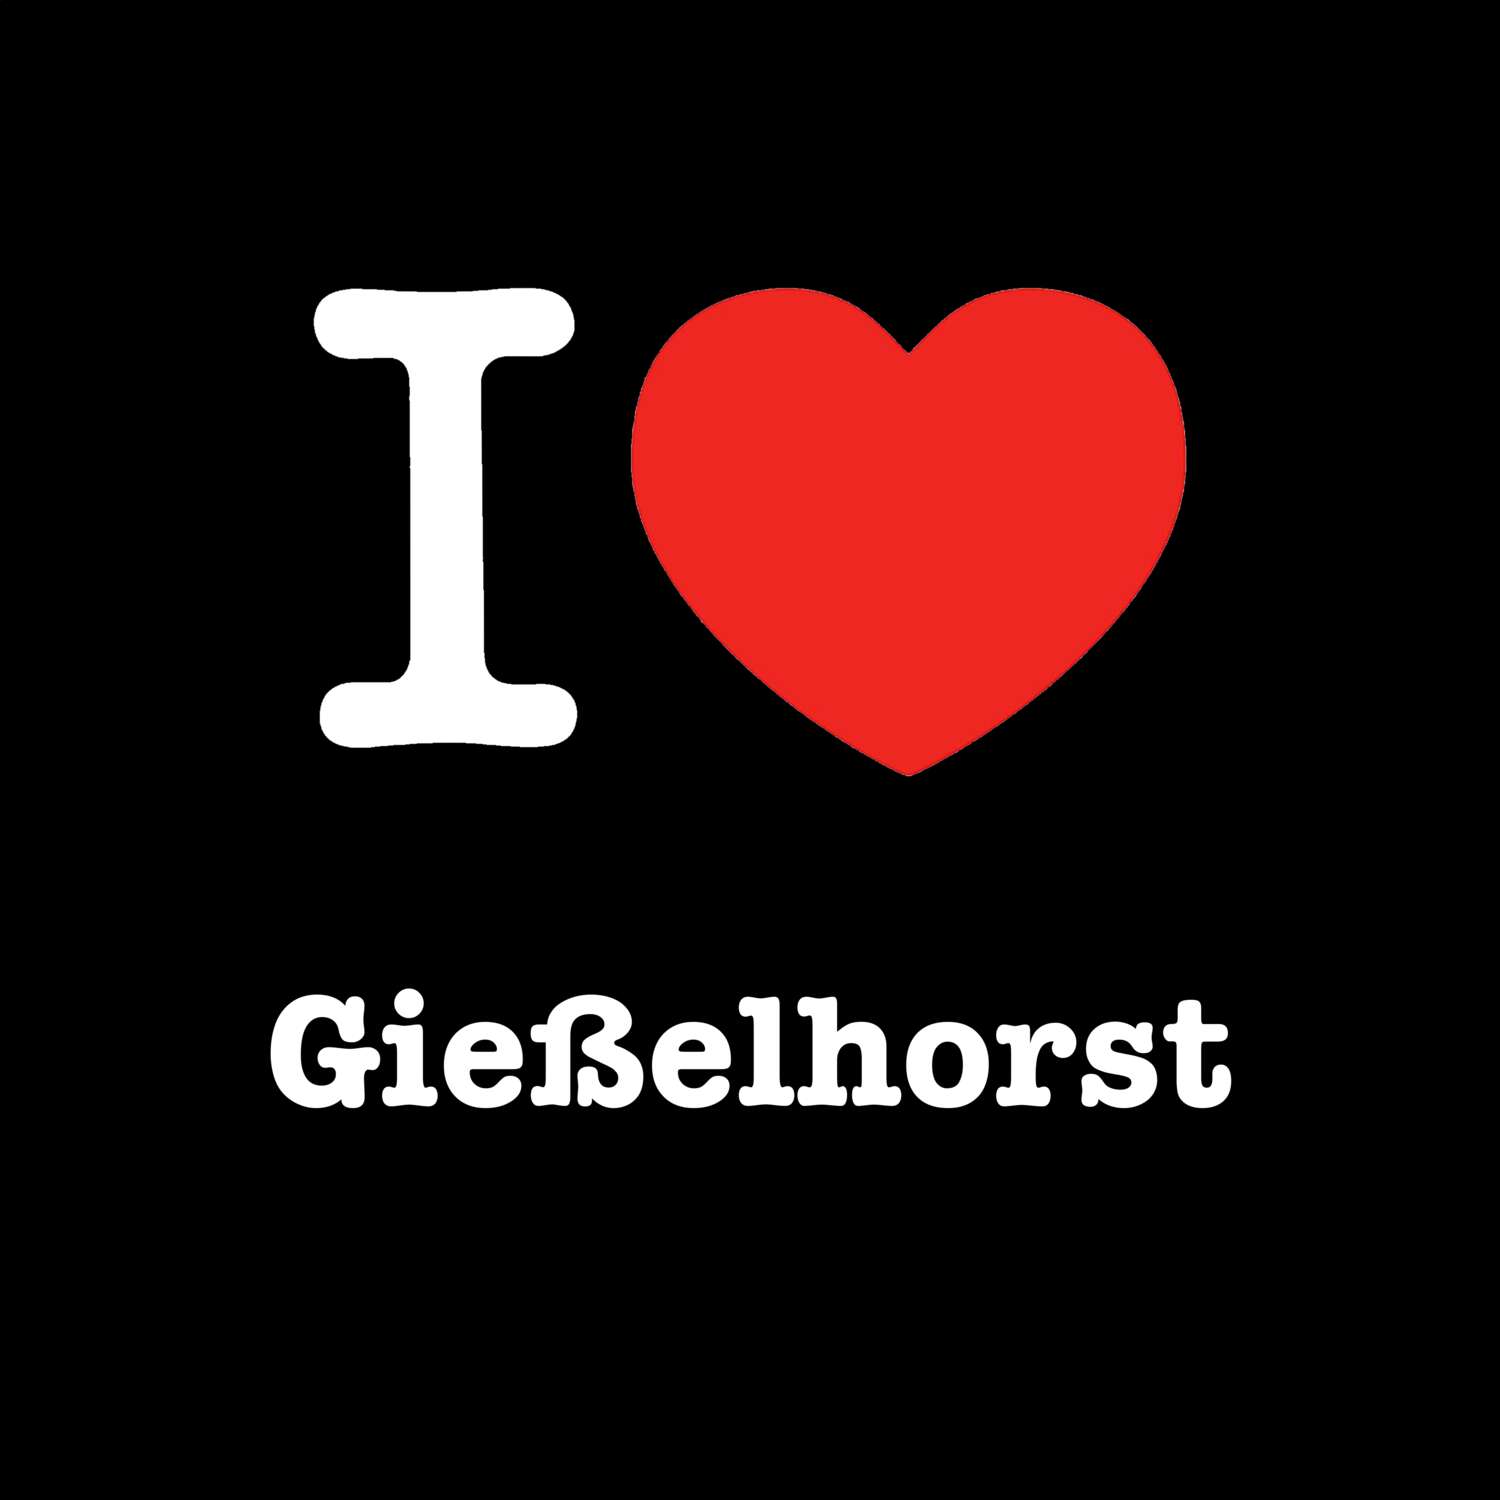 Gießelhorst T-Shirt »I love«